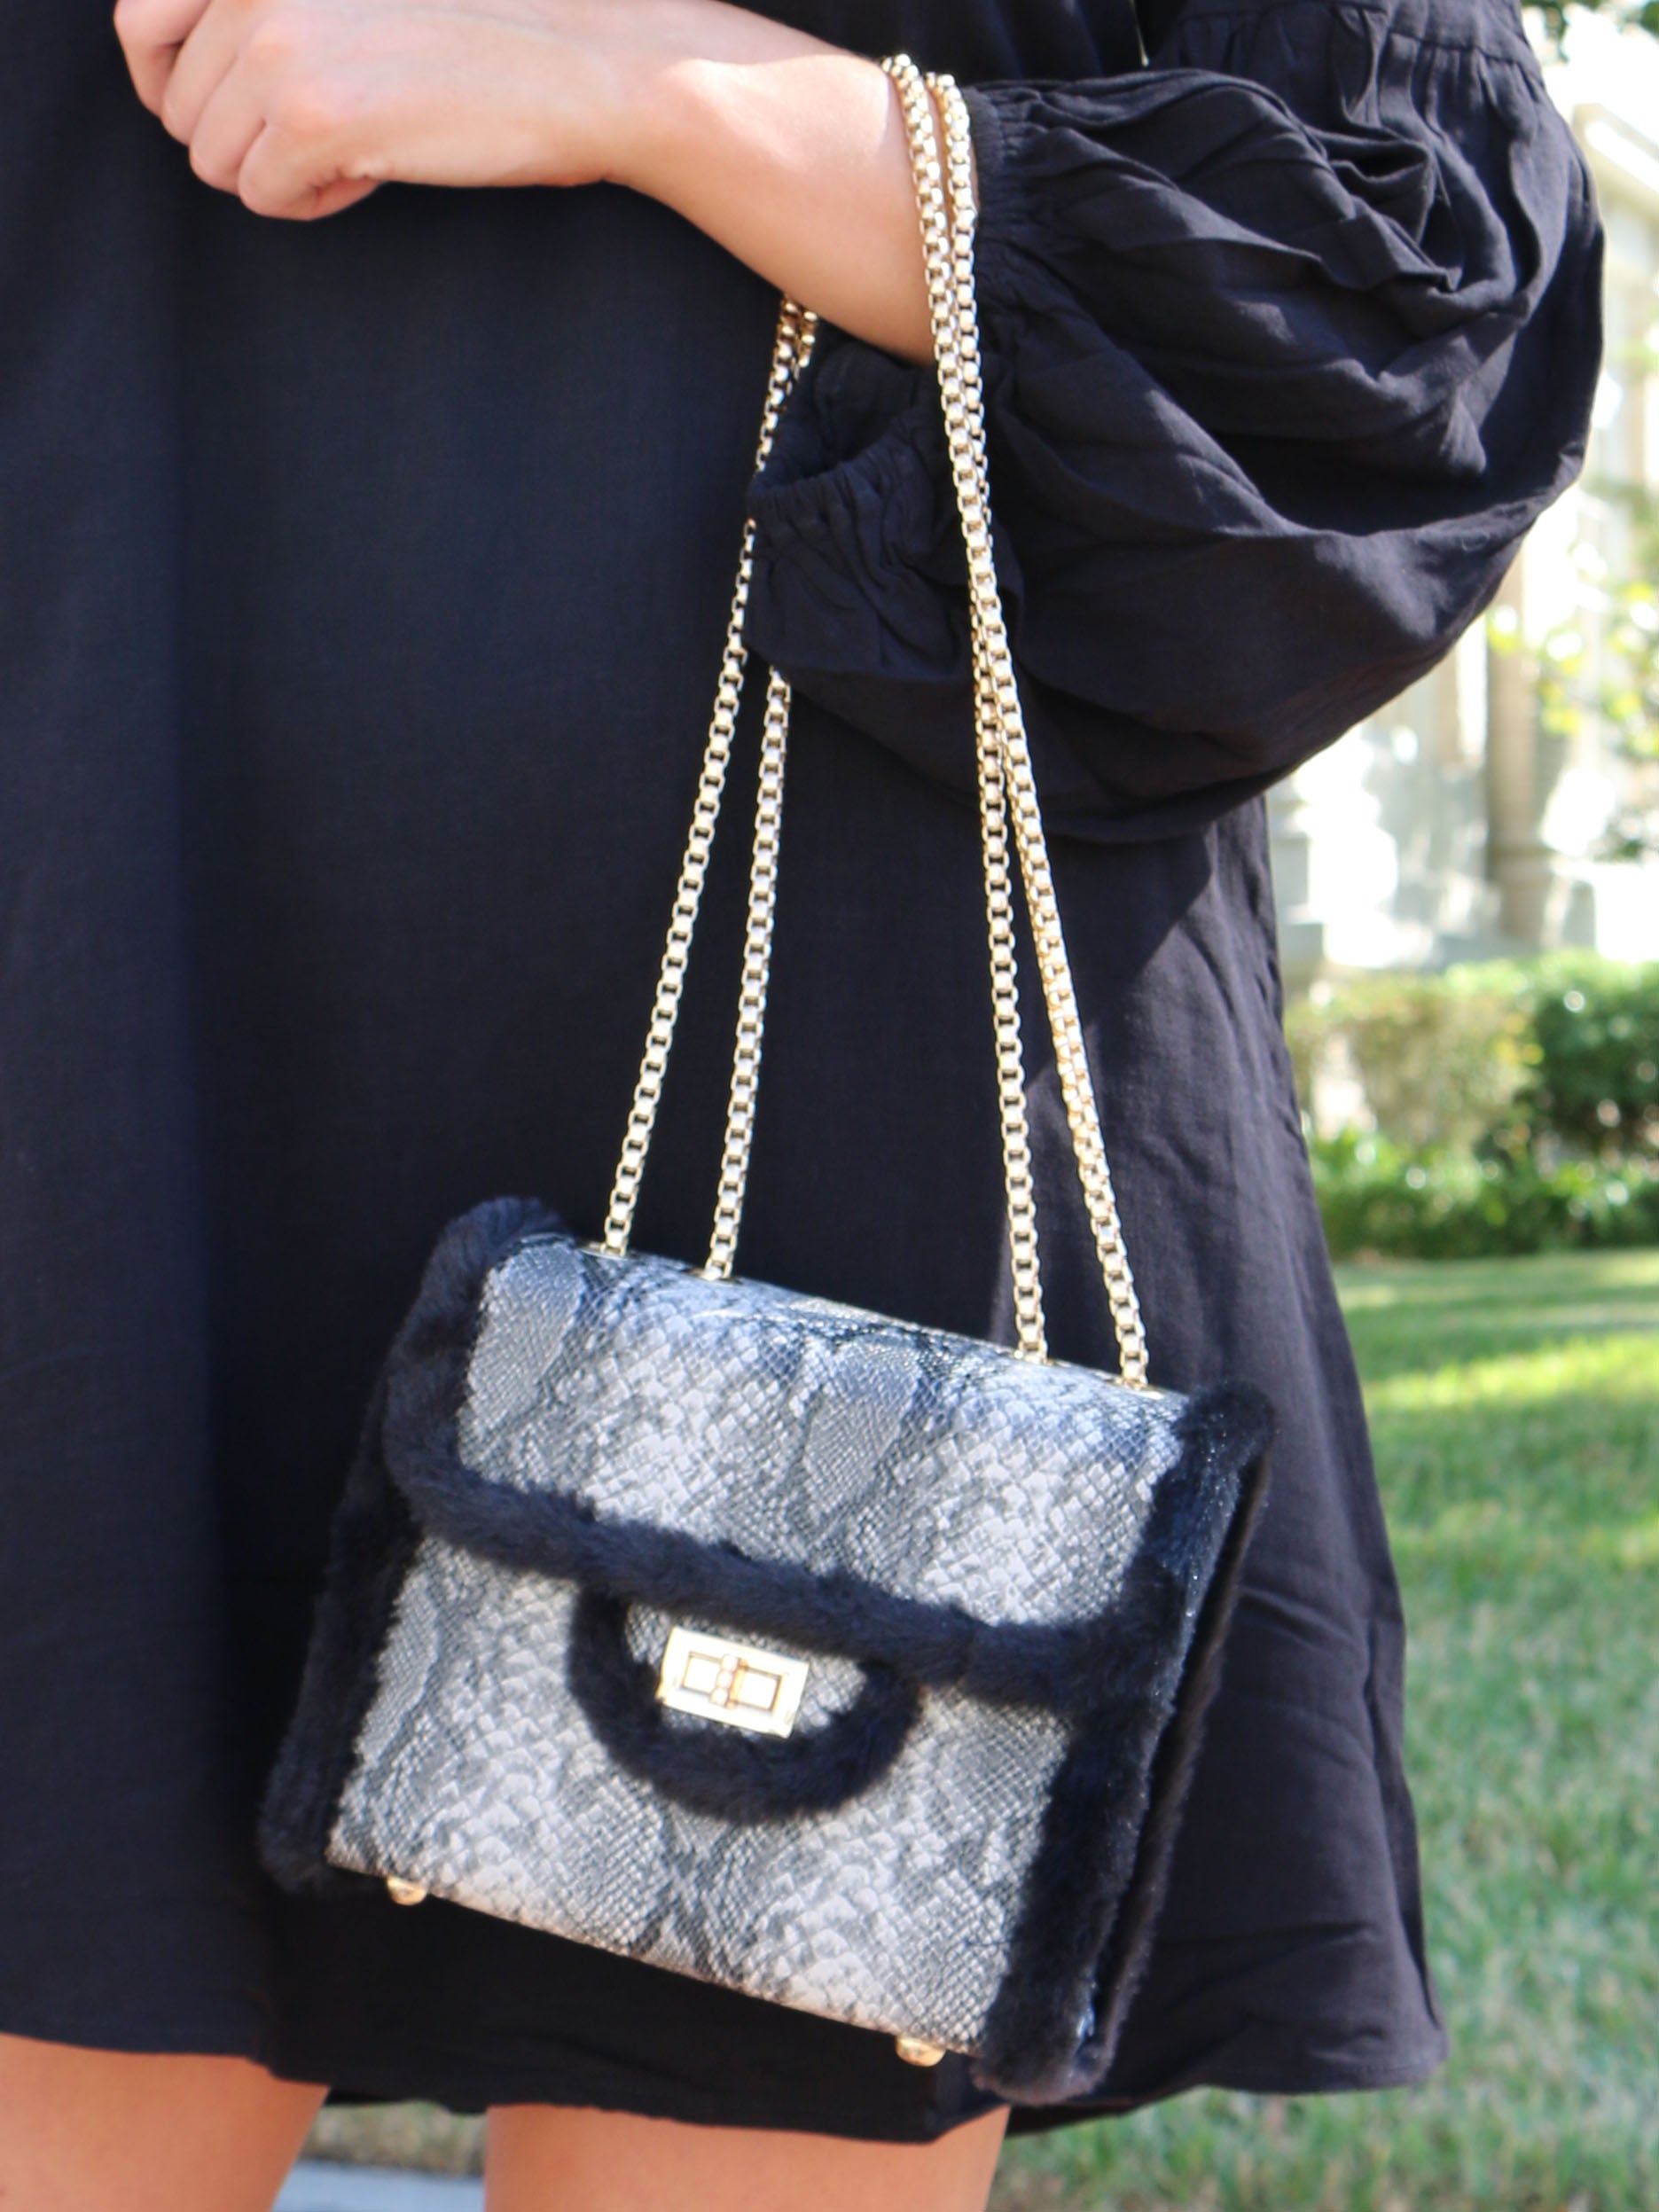 The Skylar Handbag